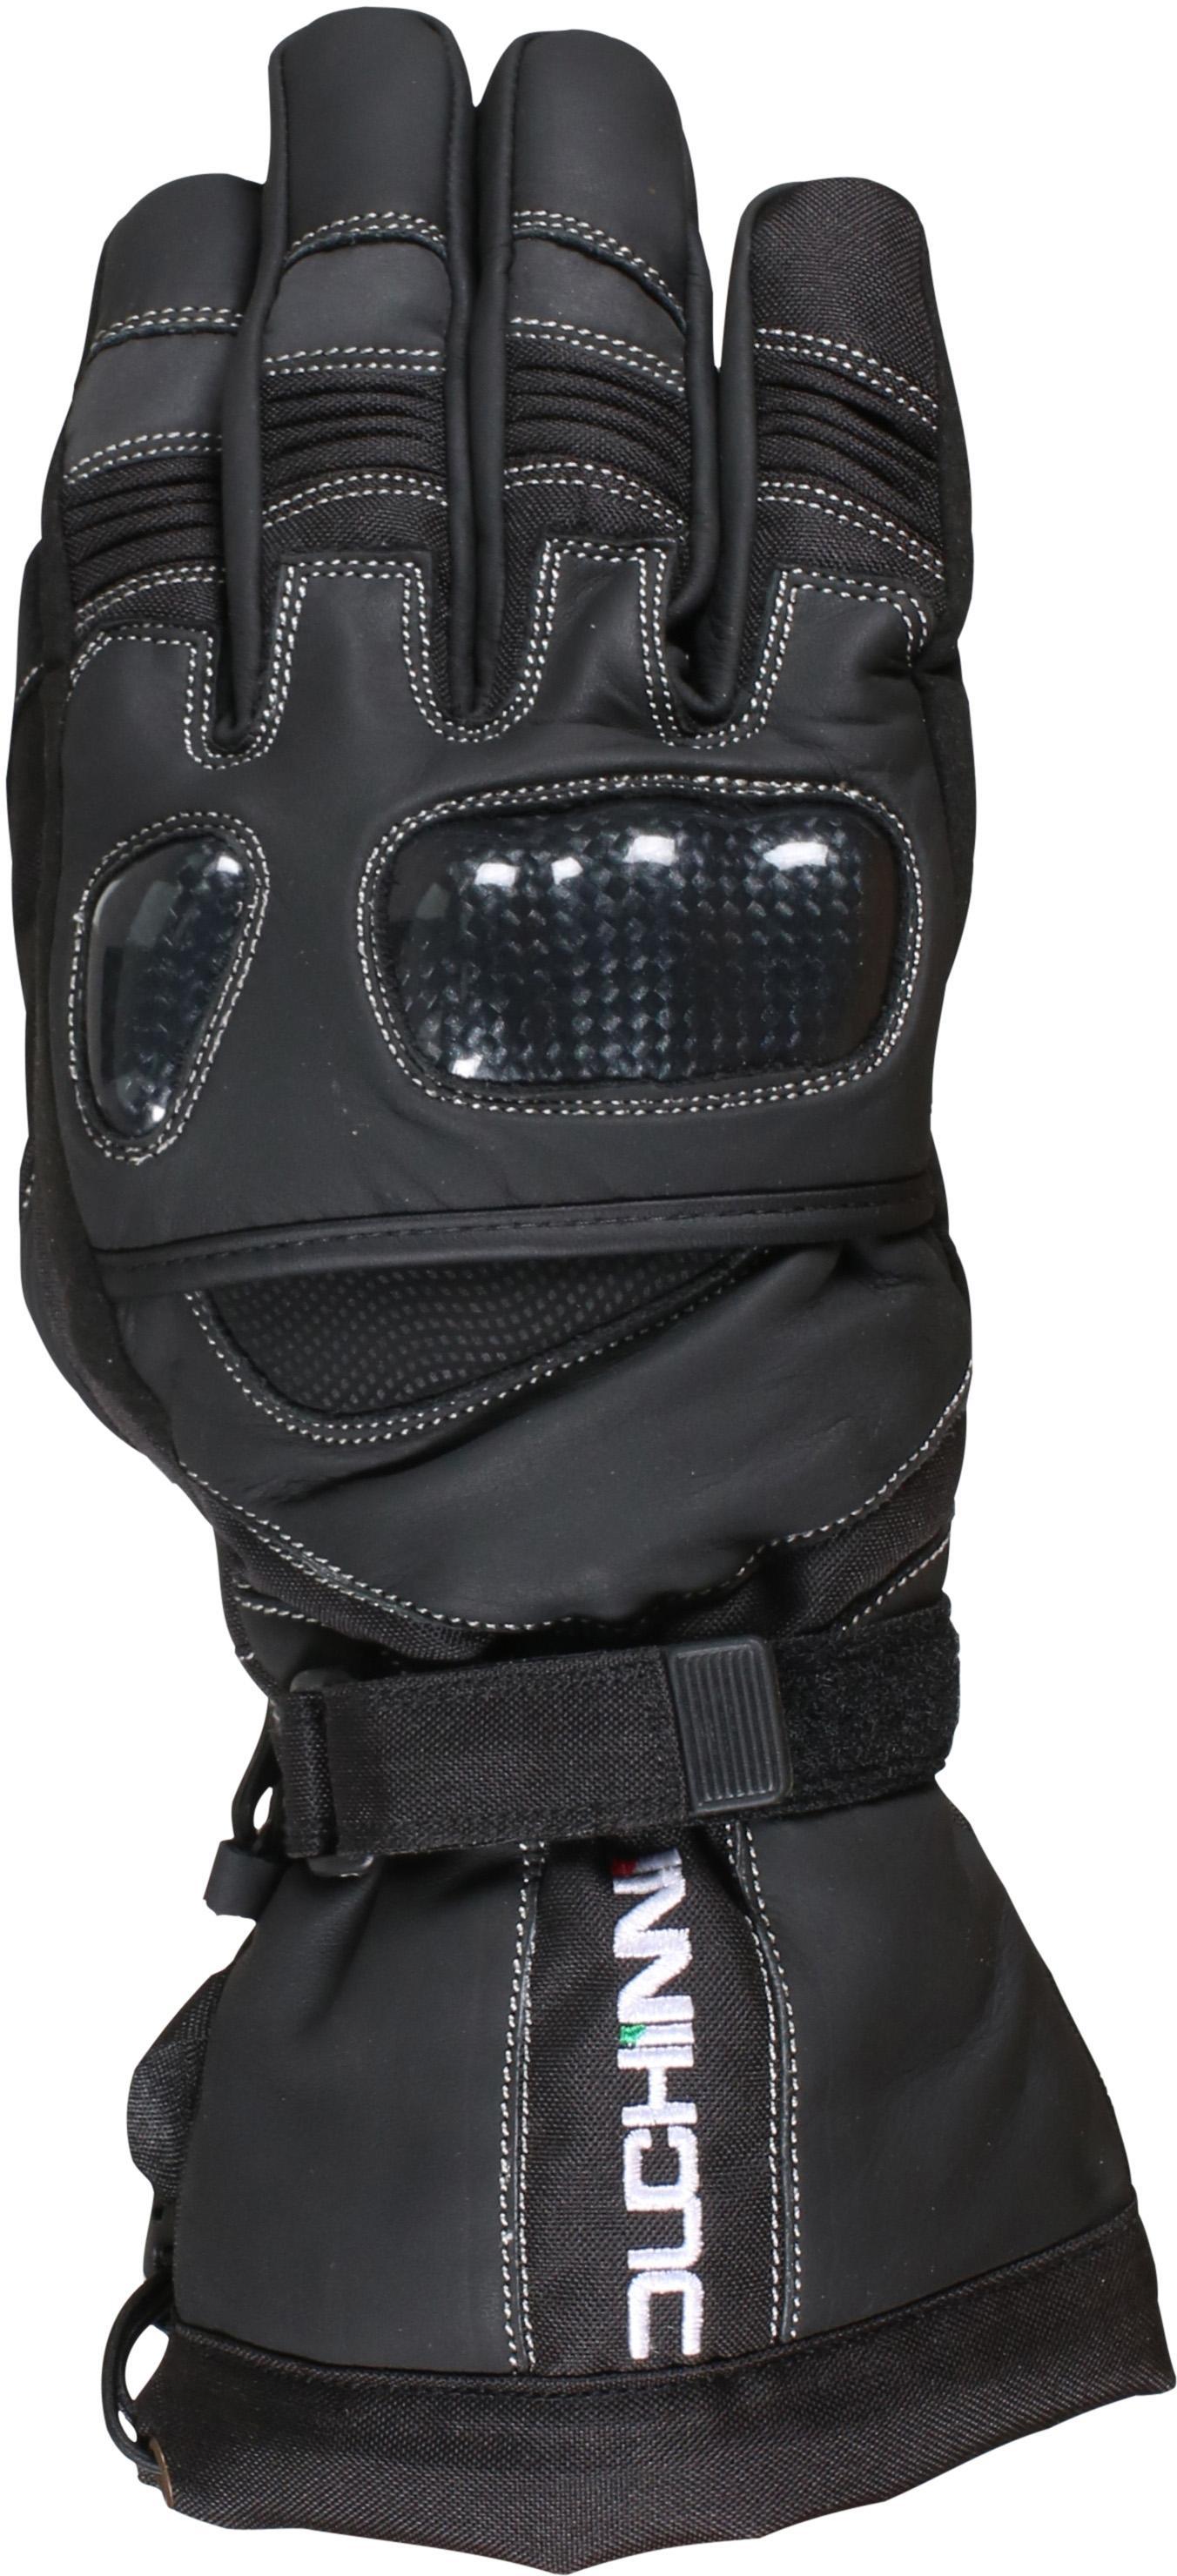 Duchinni Yukon Motorcycle Gloves - Black, Xl